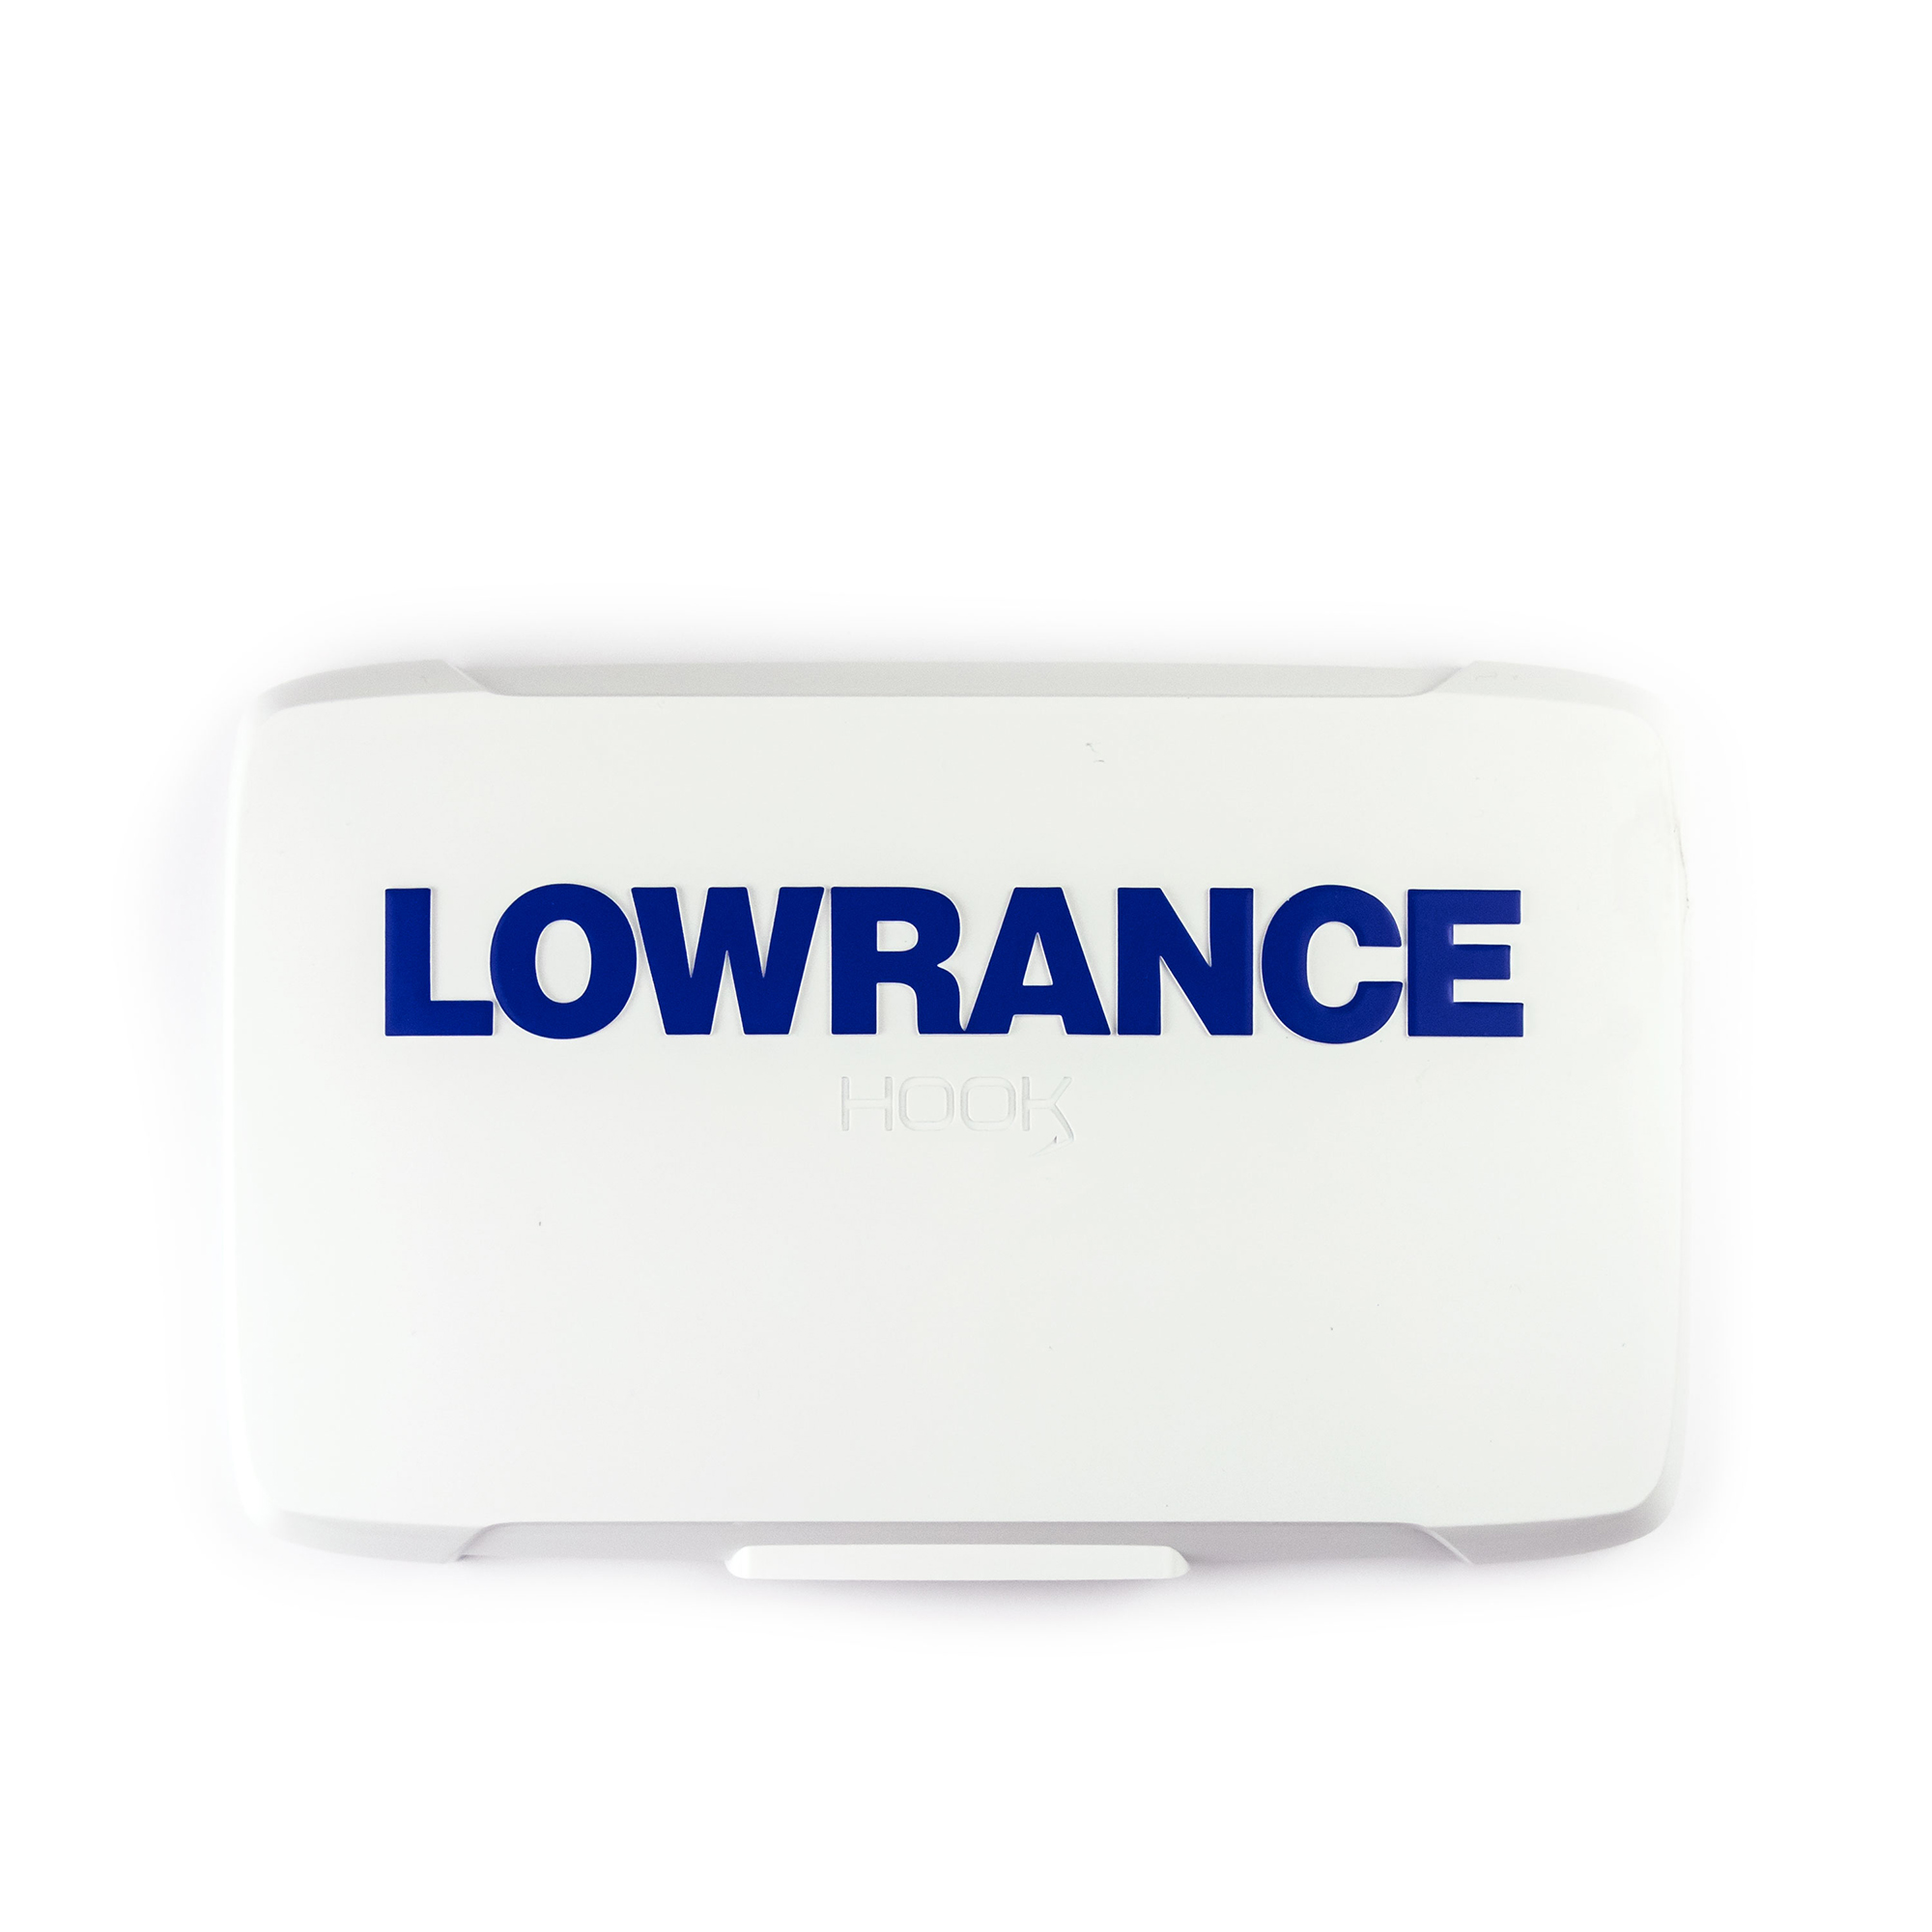 Lowrance 000-14175-001 Hook2 Sun Cover - 7